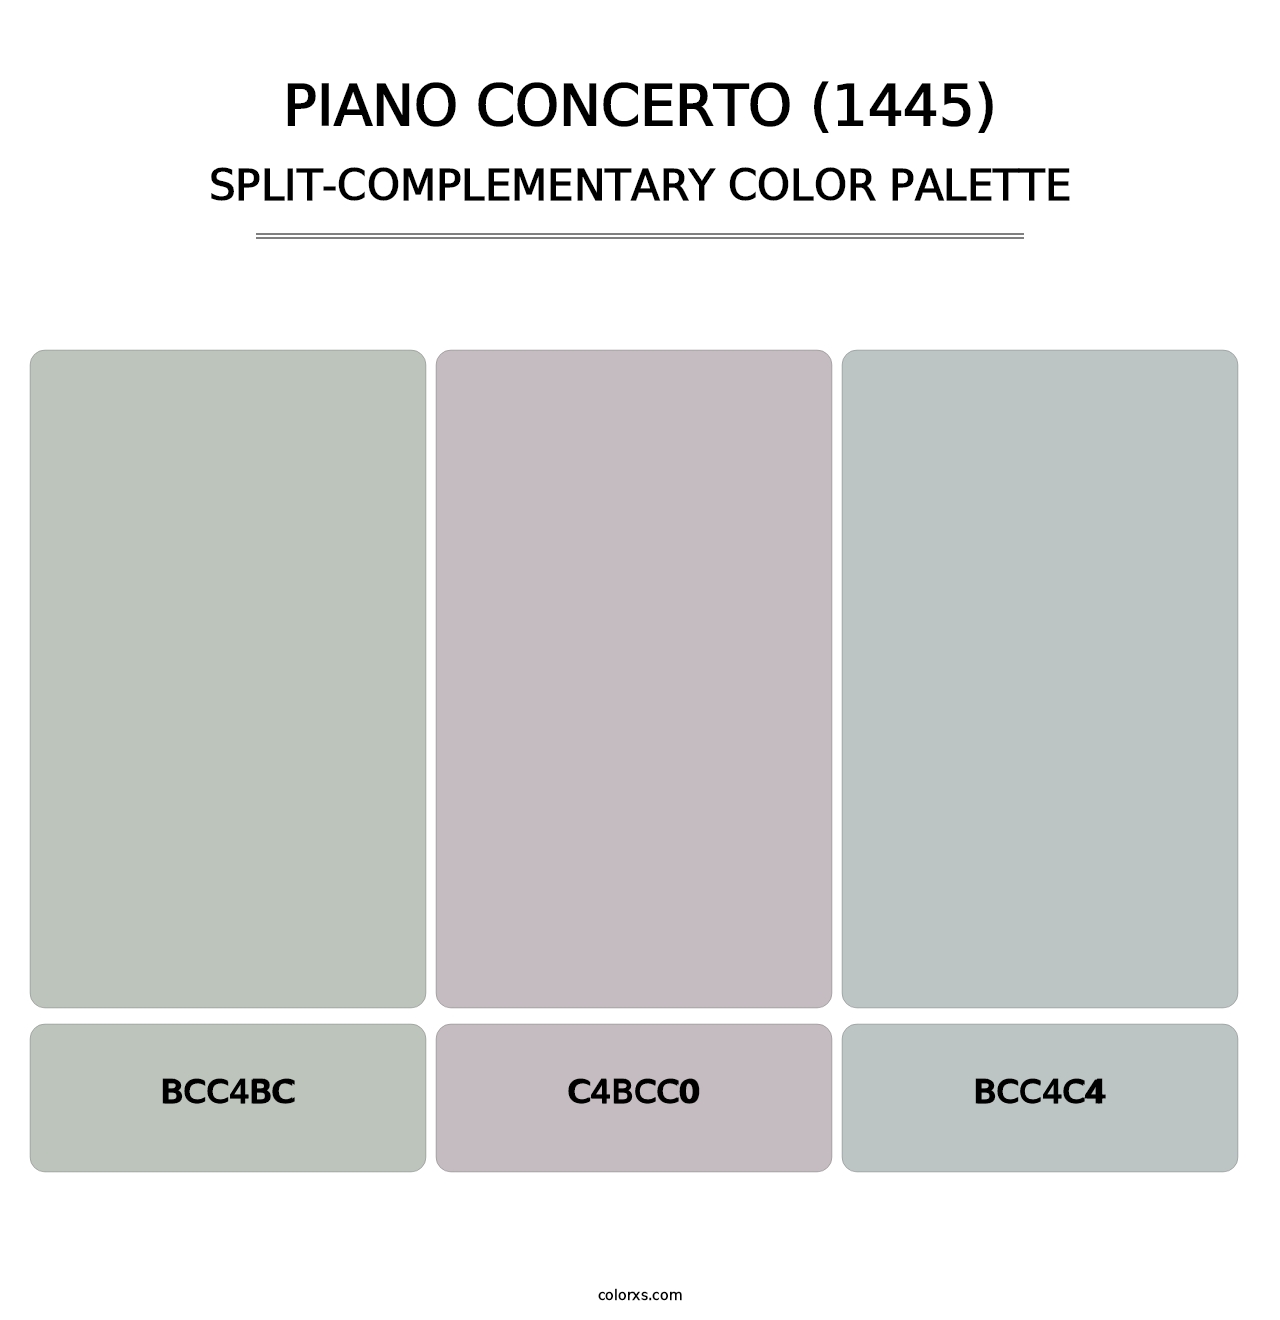 Piano Concerto (1445) - Split-Complementary Color Palette